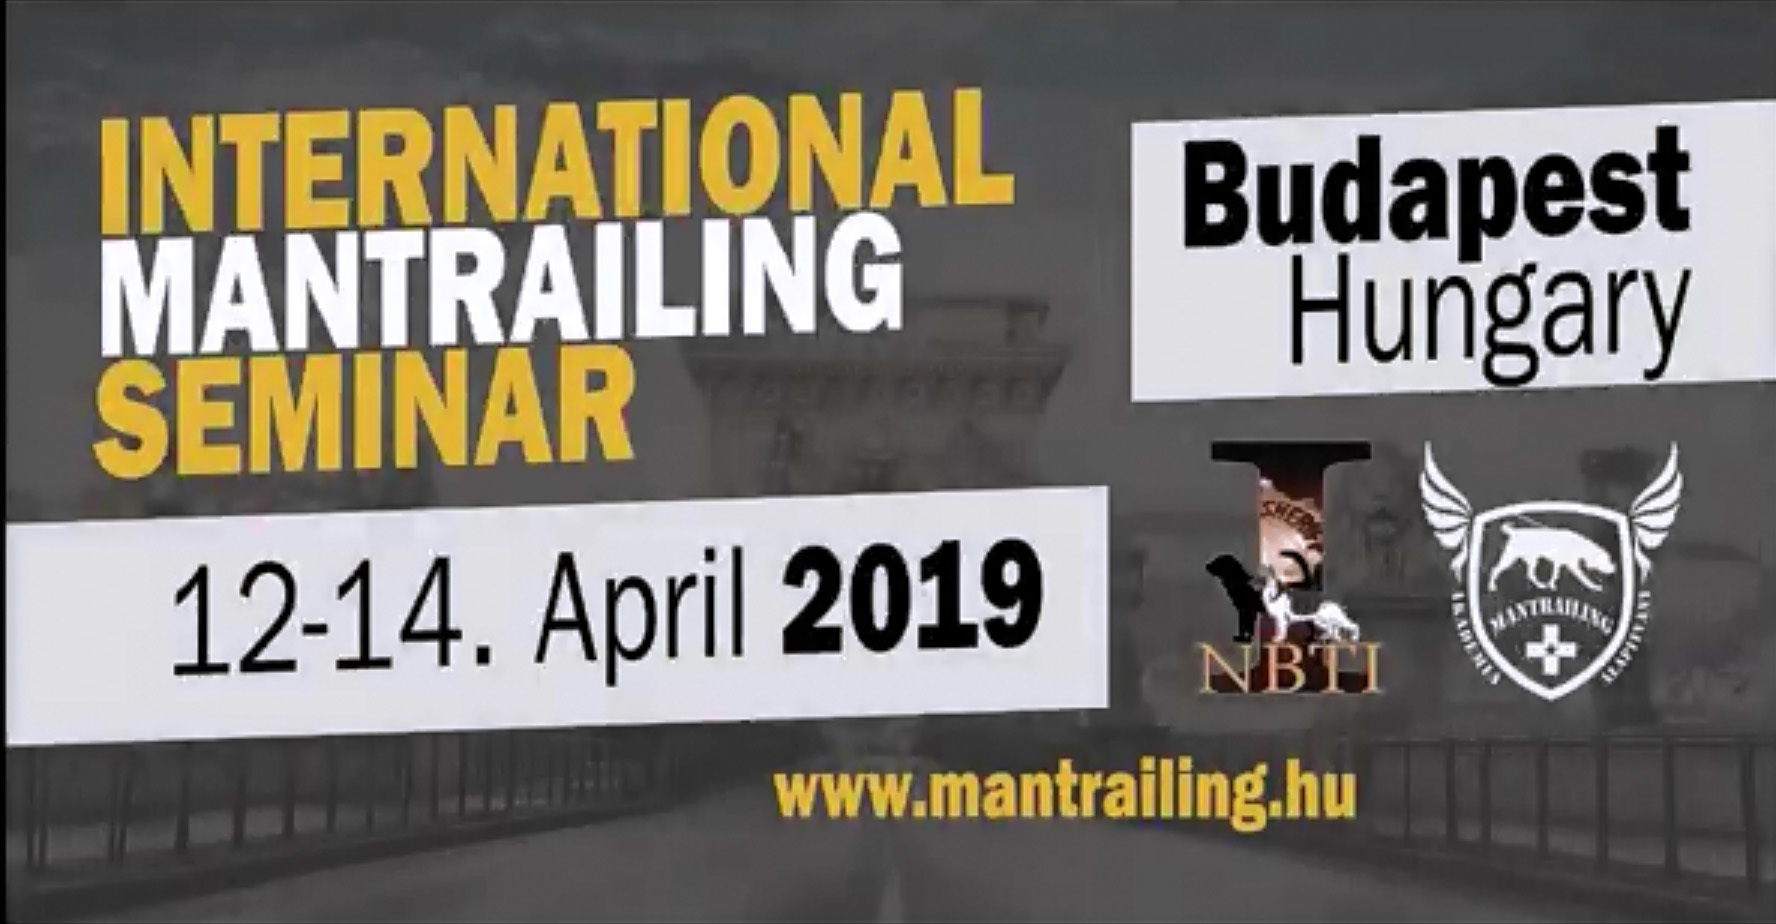 International Mantrailing Seminar Budapest 12-14.04.2019 